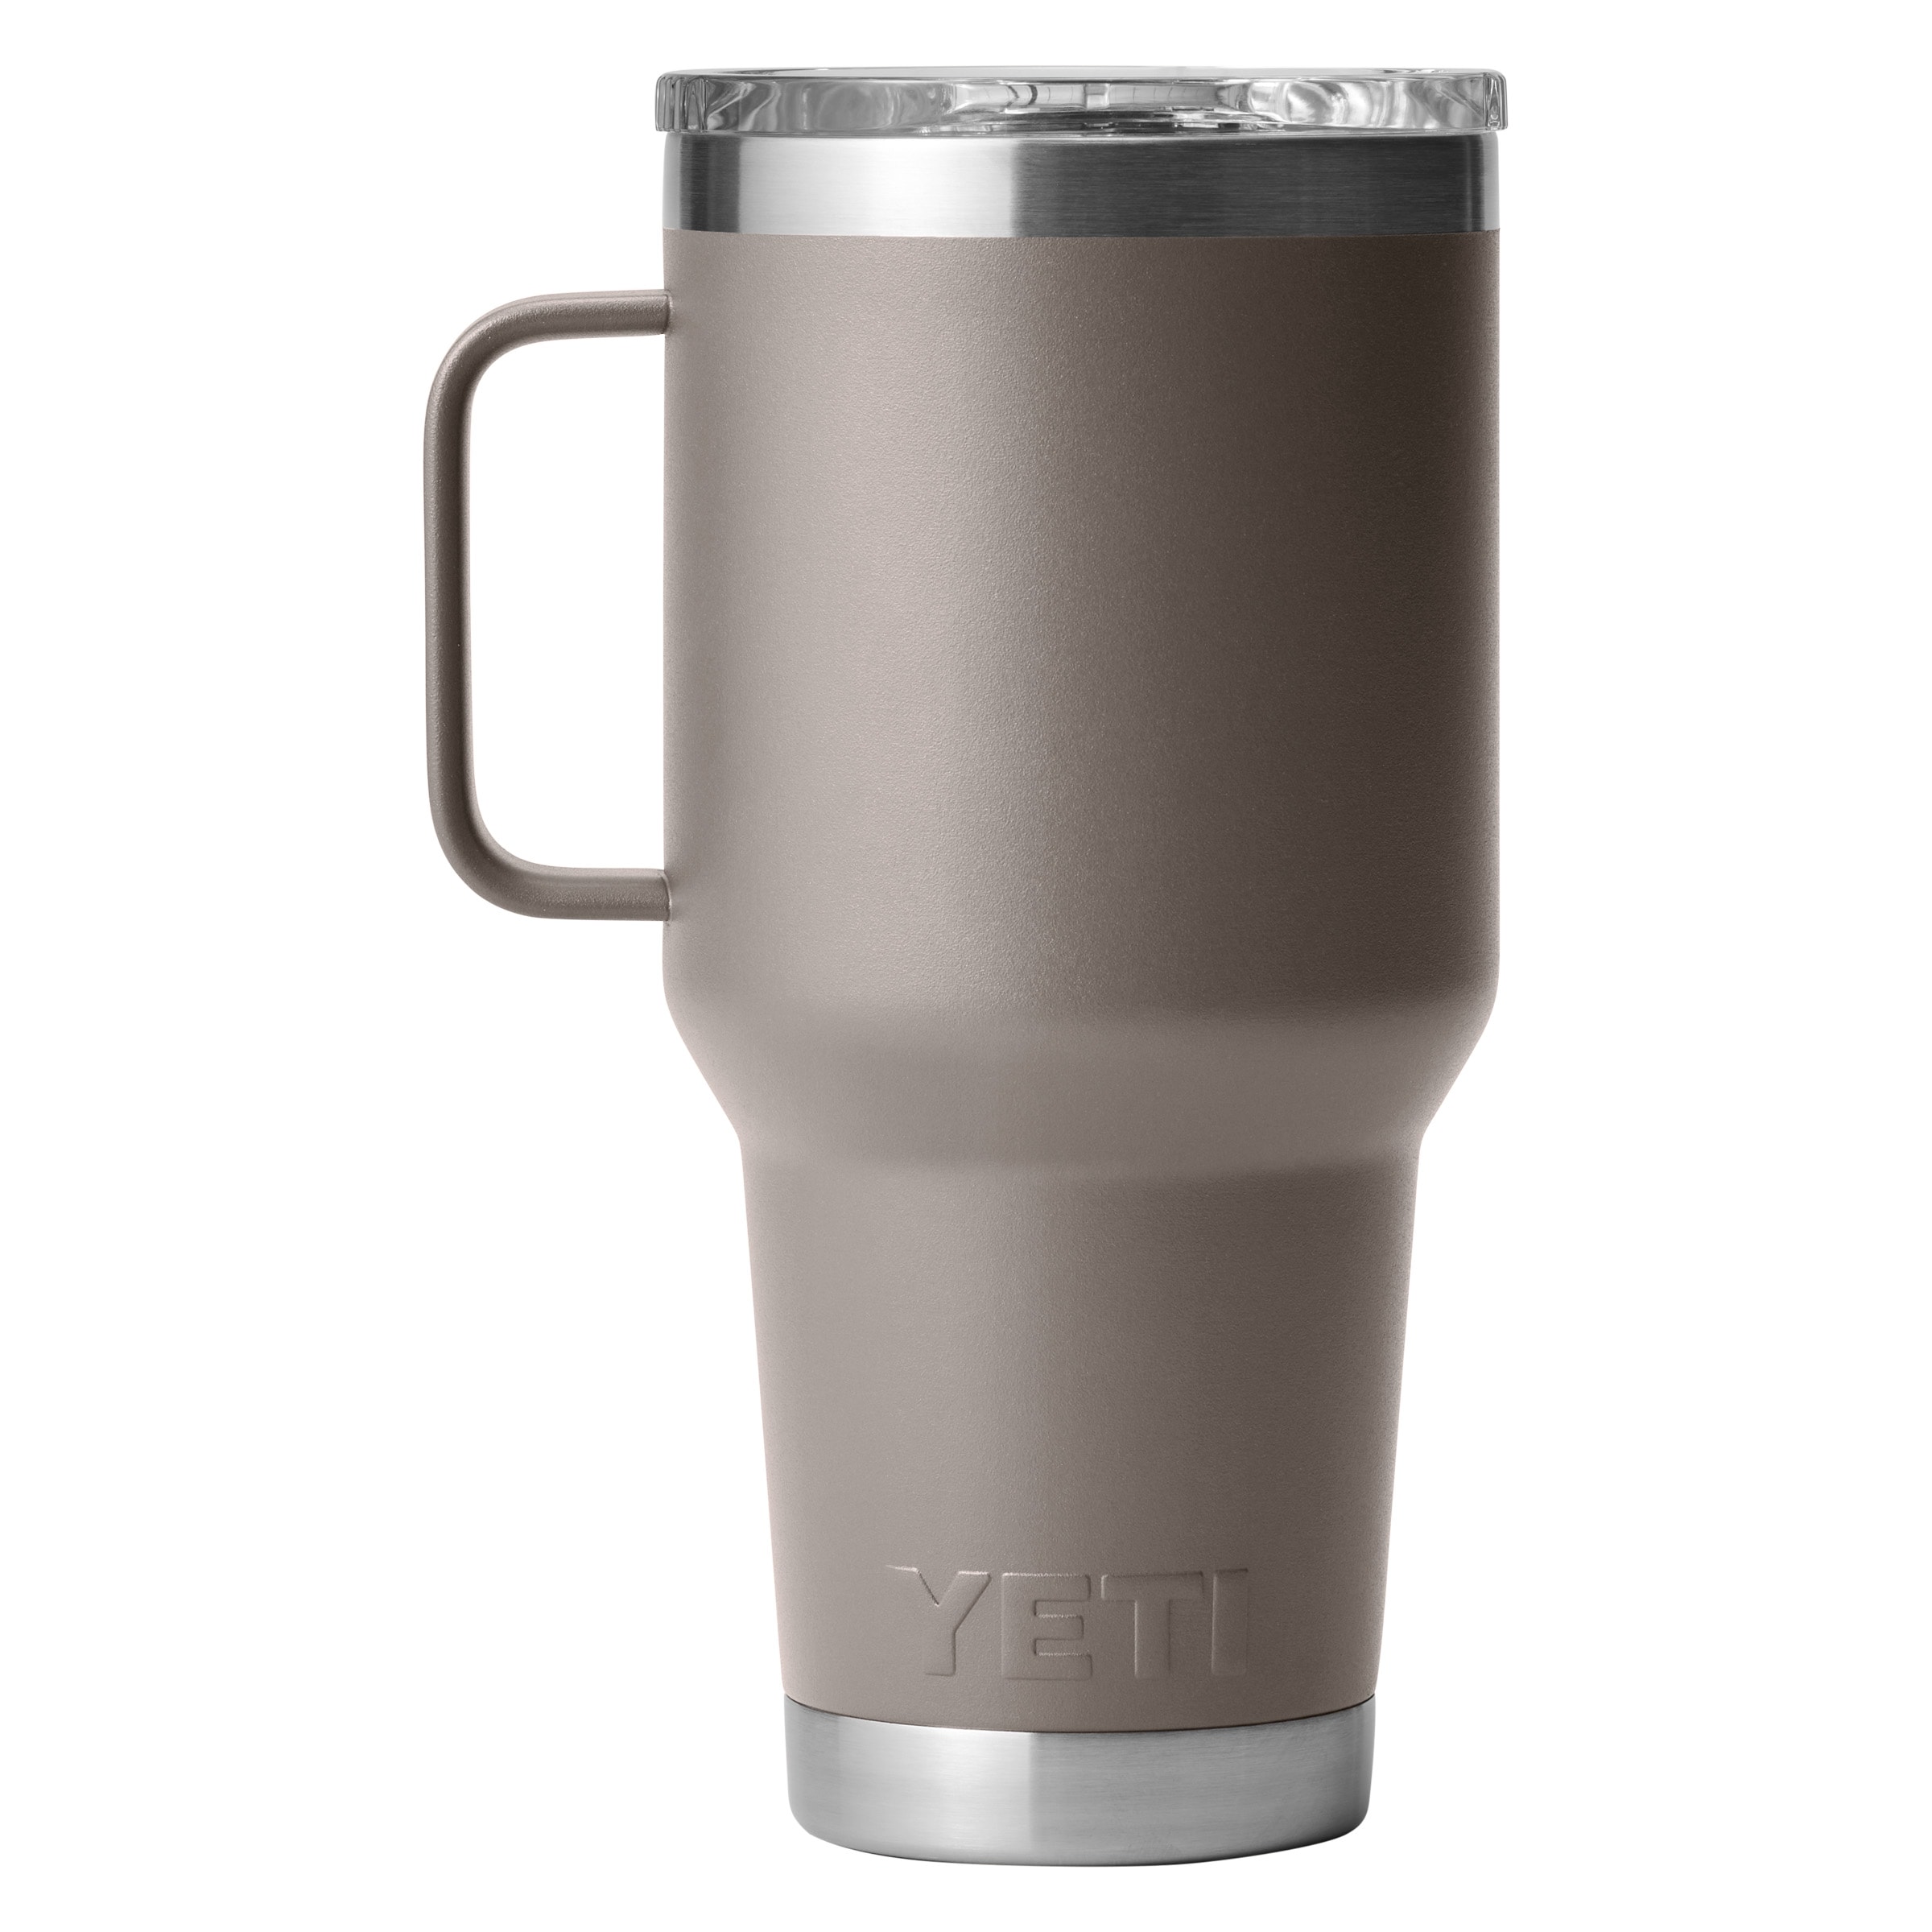  YETI Rambler 30 oz Travel Mug, Stainless Steel, Vacuum